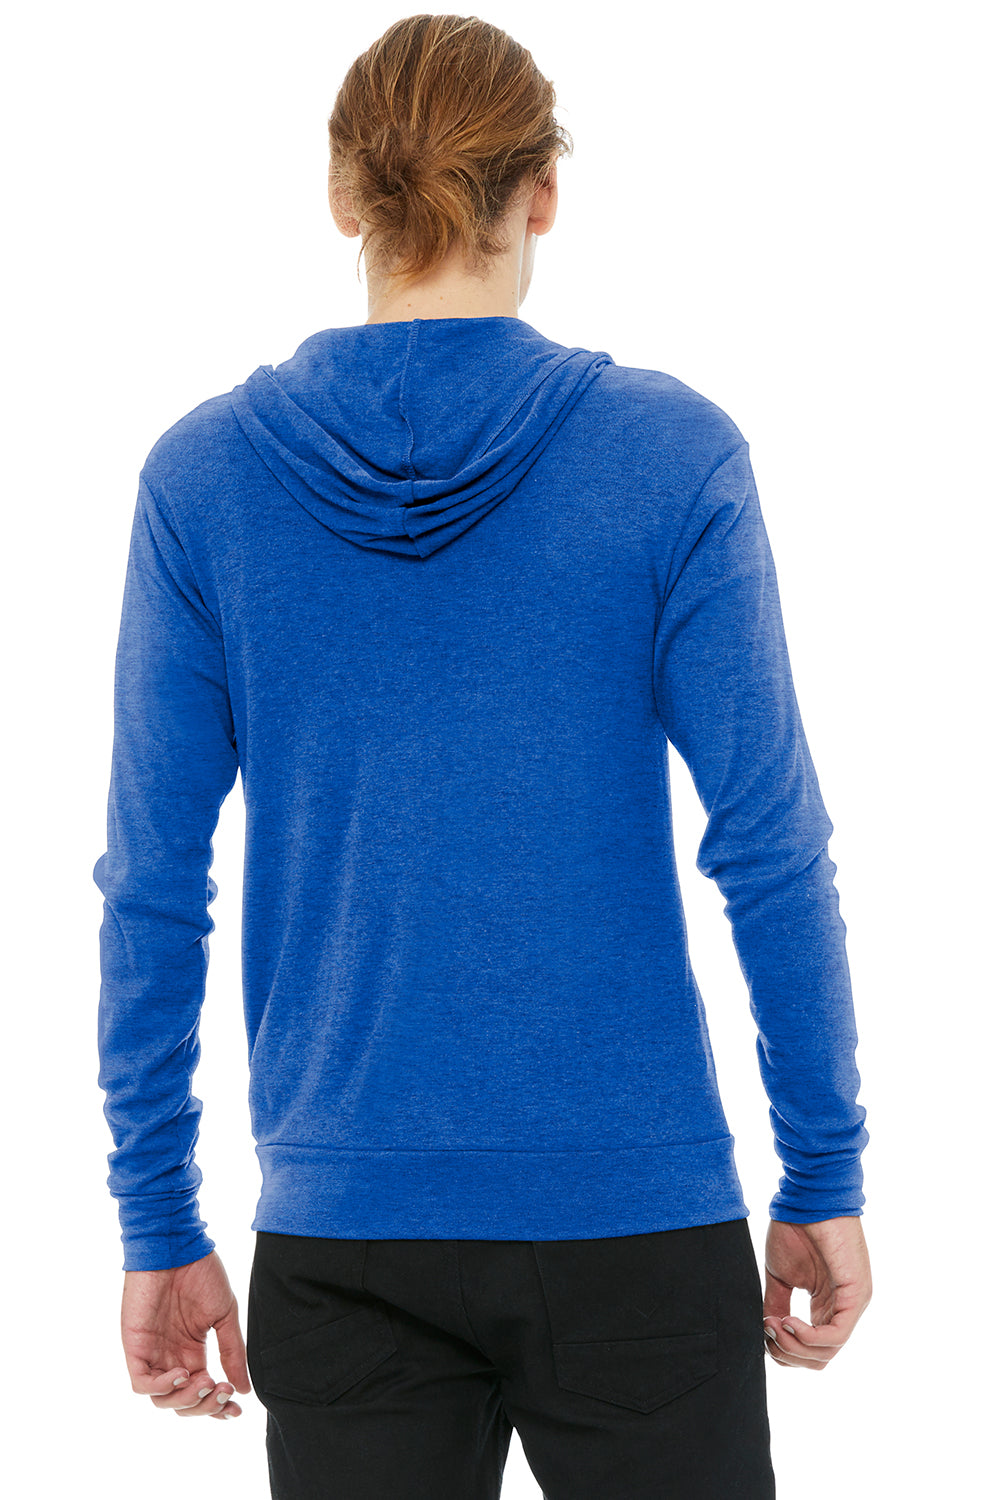 Bella + Canvas BC3939/3939 Mens Full Zip Long Sleeve Hooded T-Shirt Hoodie True Royal Blue Model Back